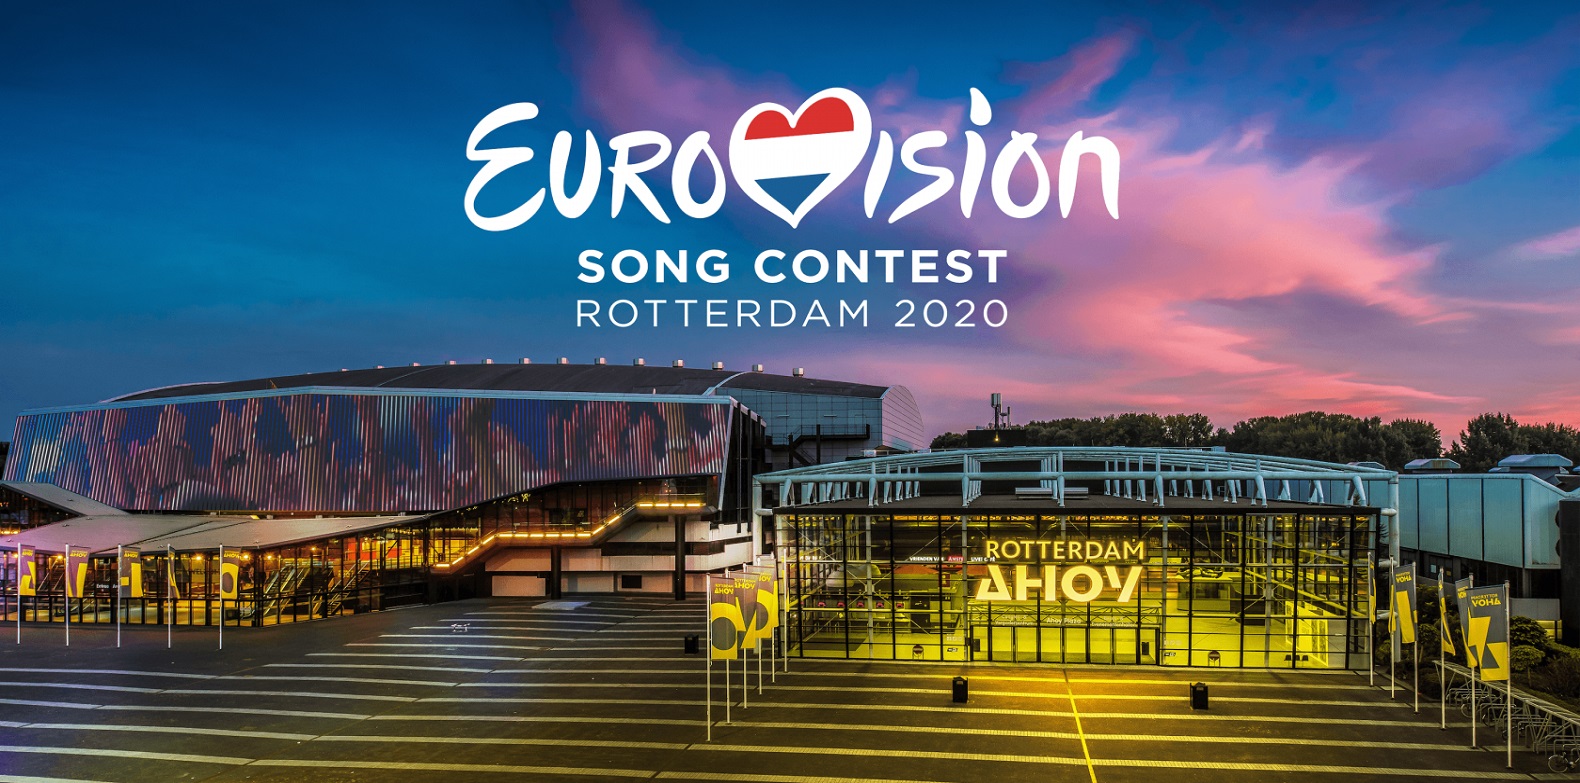 Eurovision: Στην πανδημία του κορονοϊού απαντά με συναυλίες από το σπίτι - Φωτογραφία 1